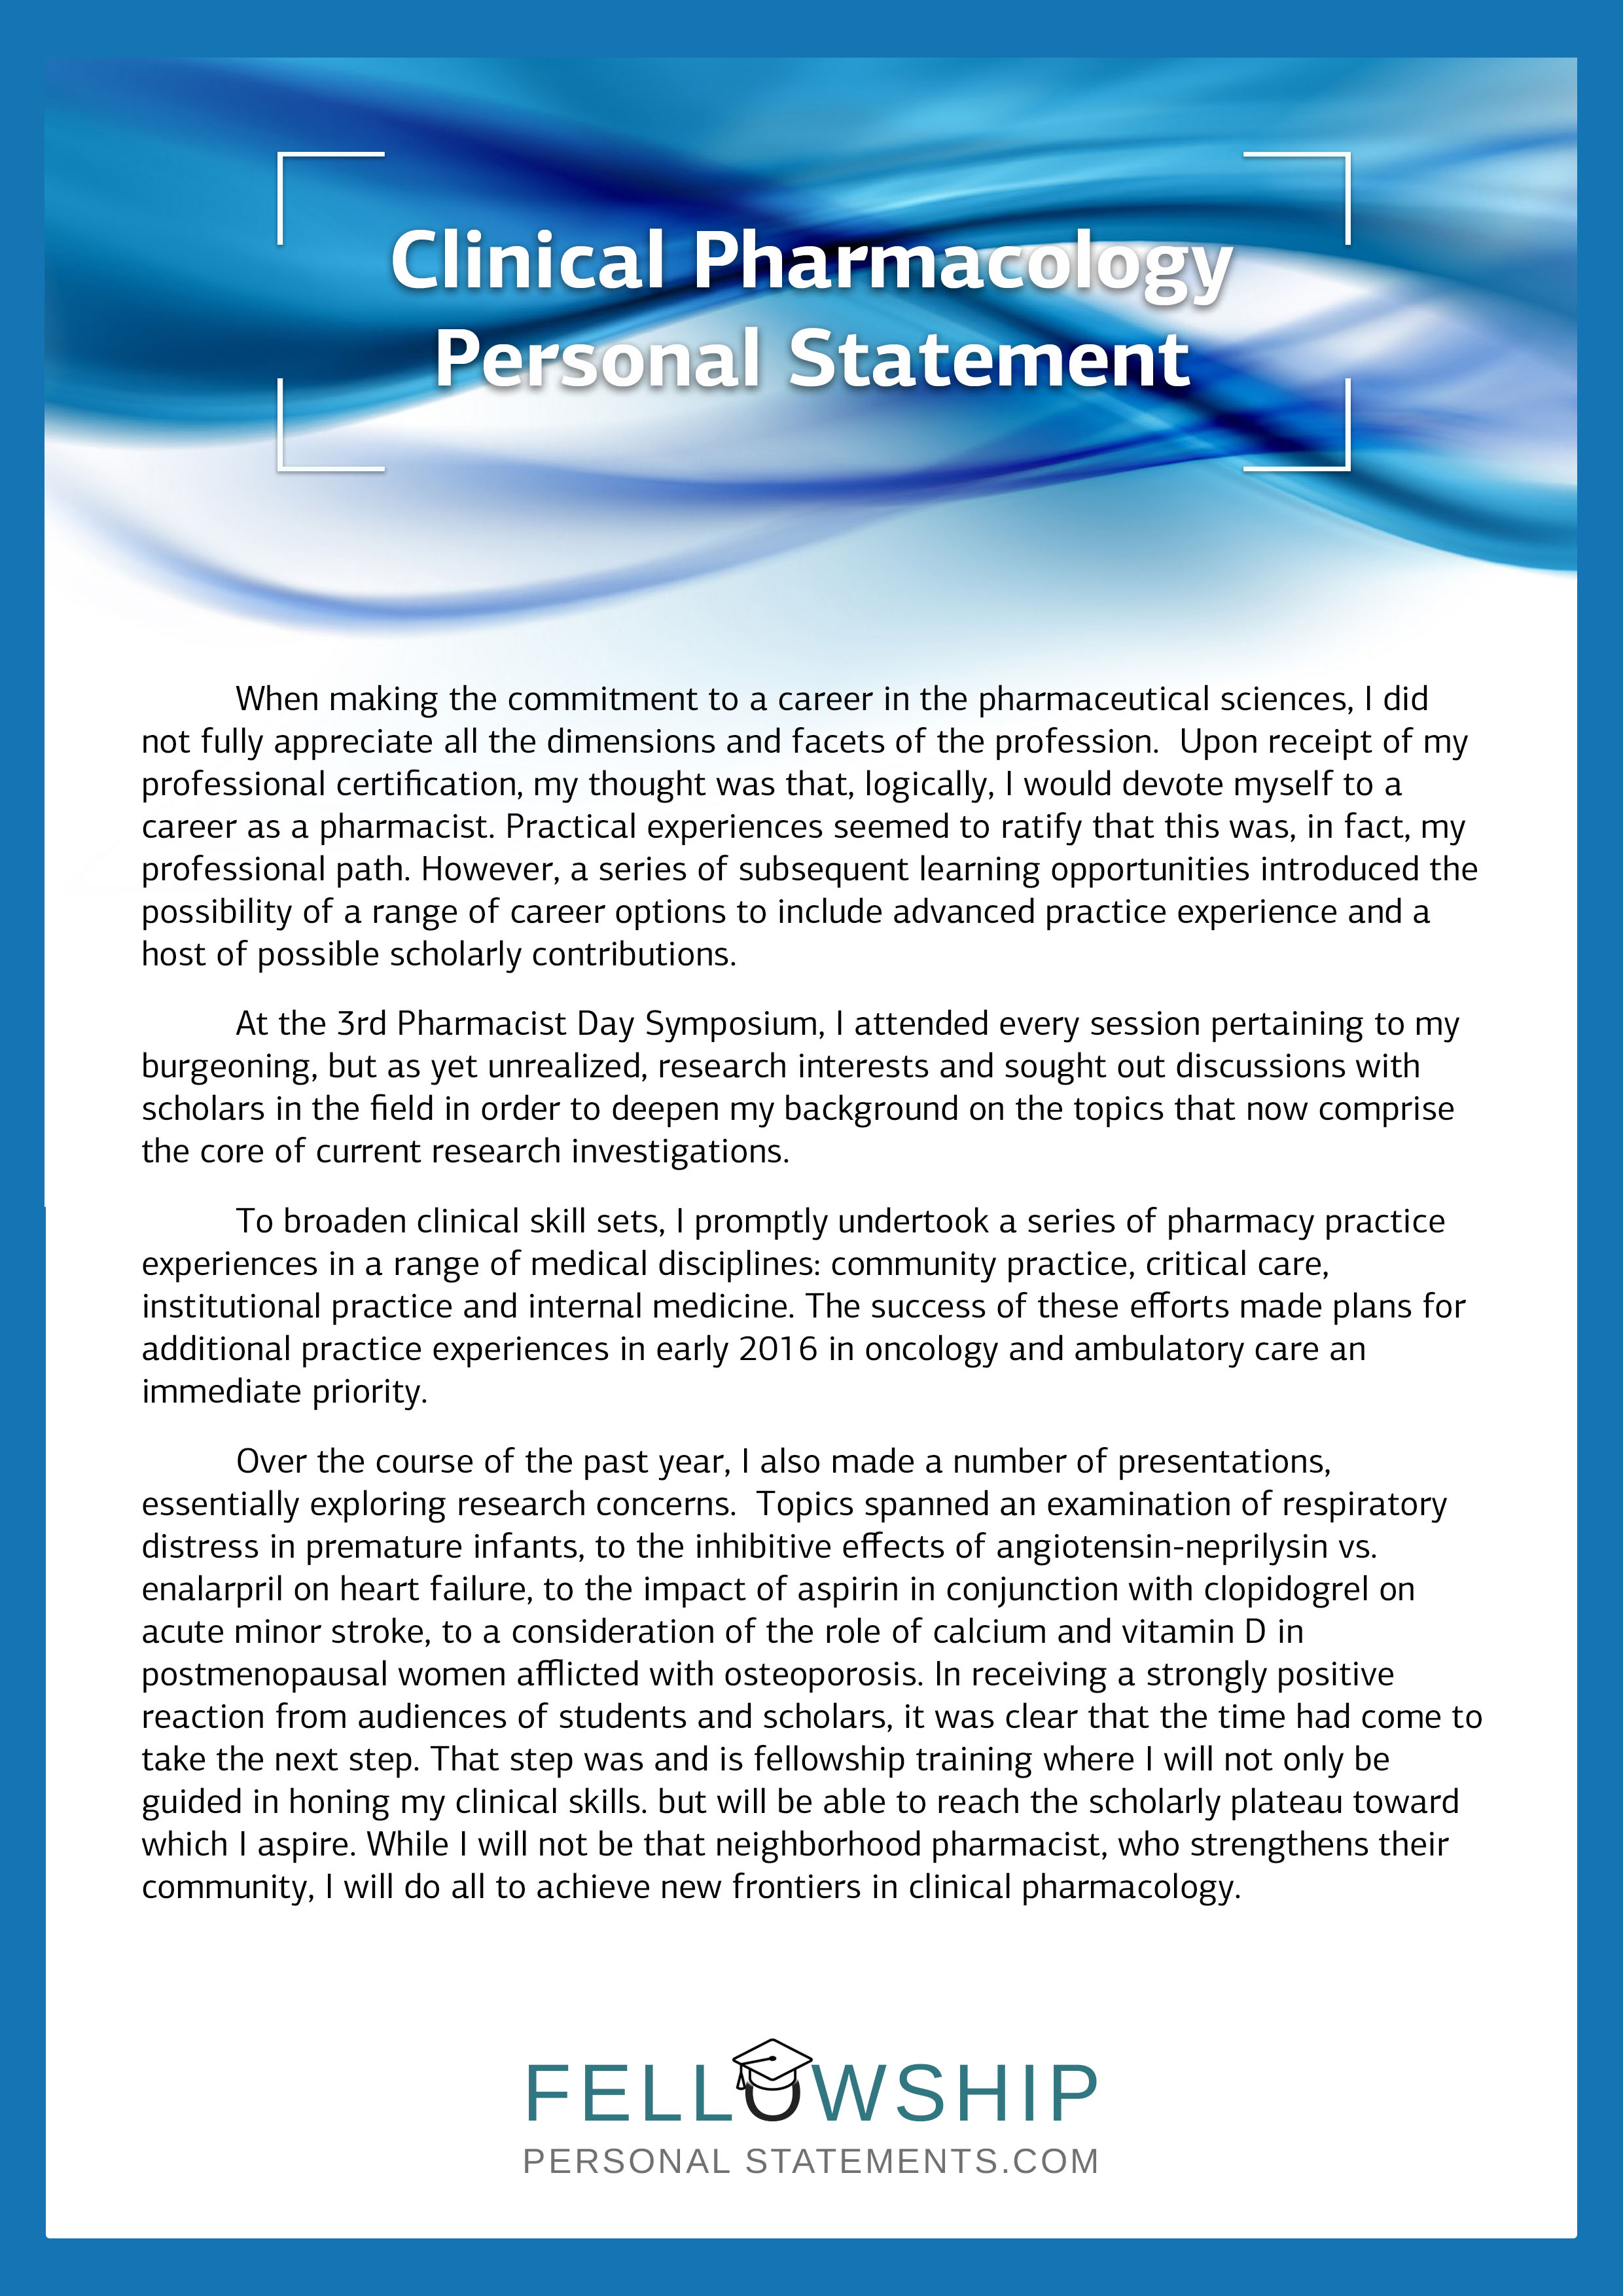 Pharmacy personal statement